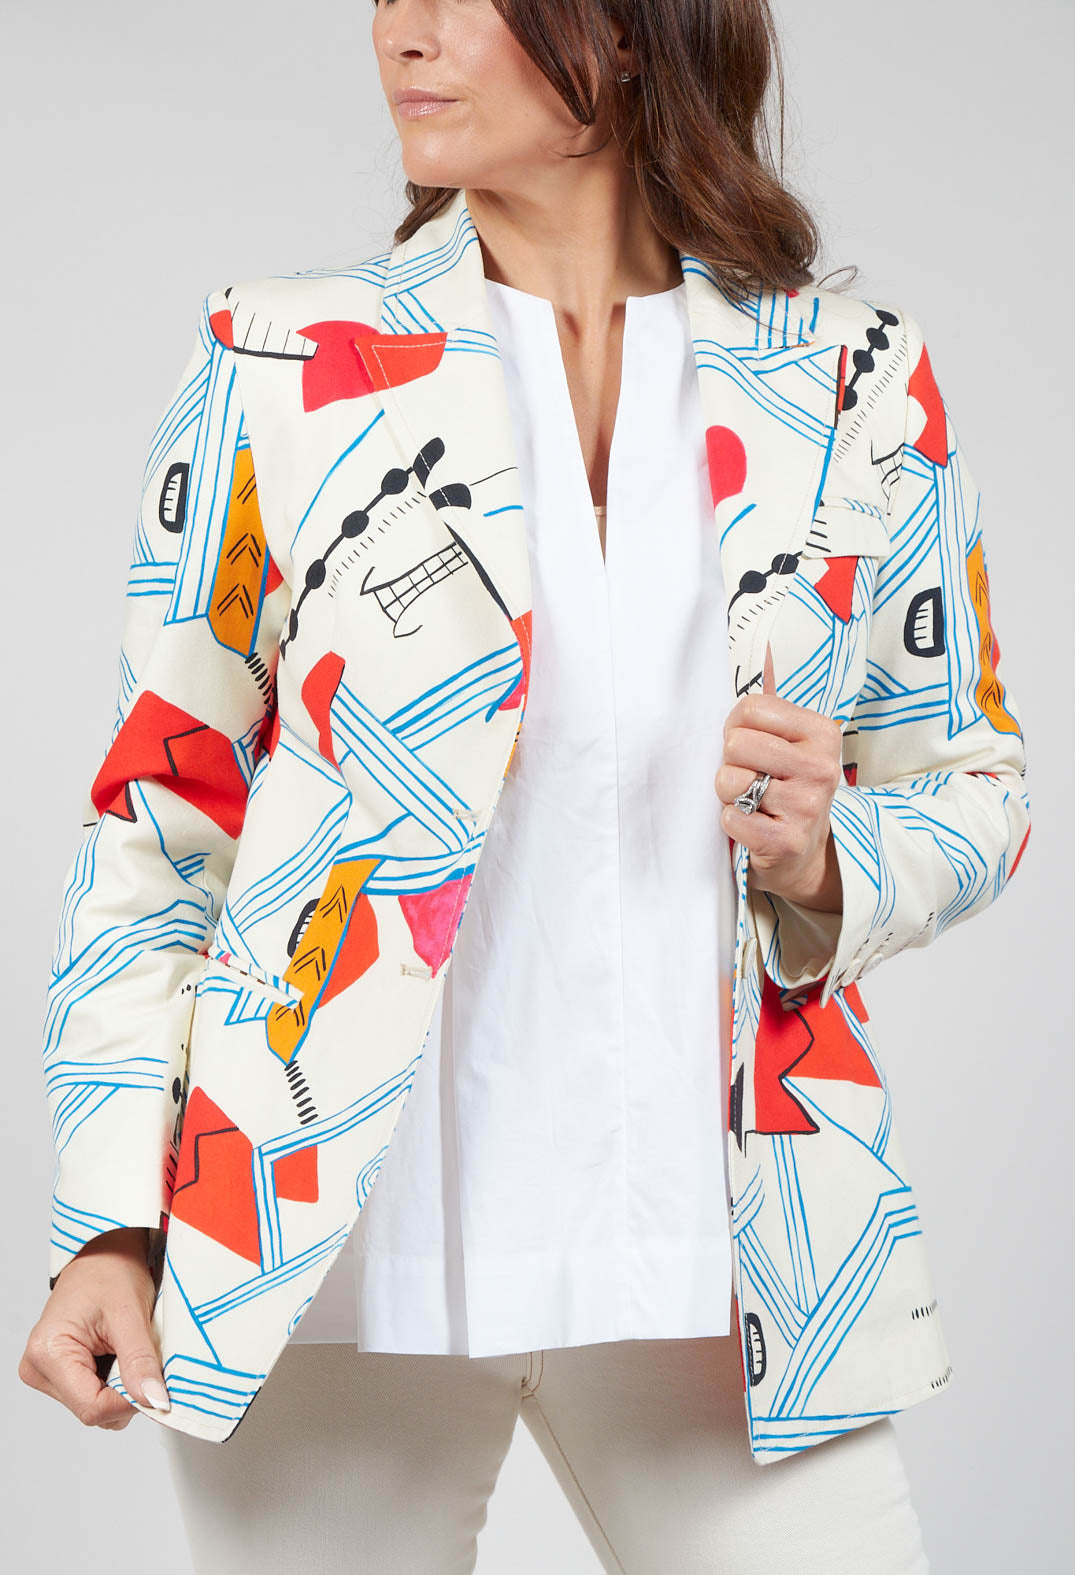 matisse print jacket with collar detailing